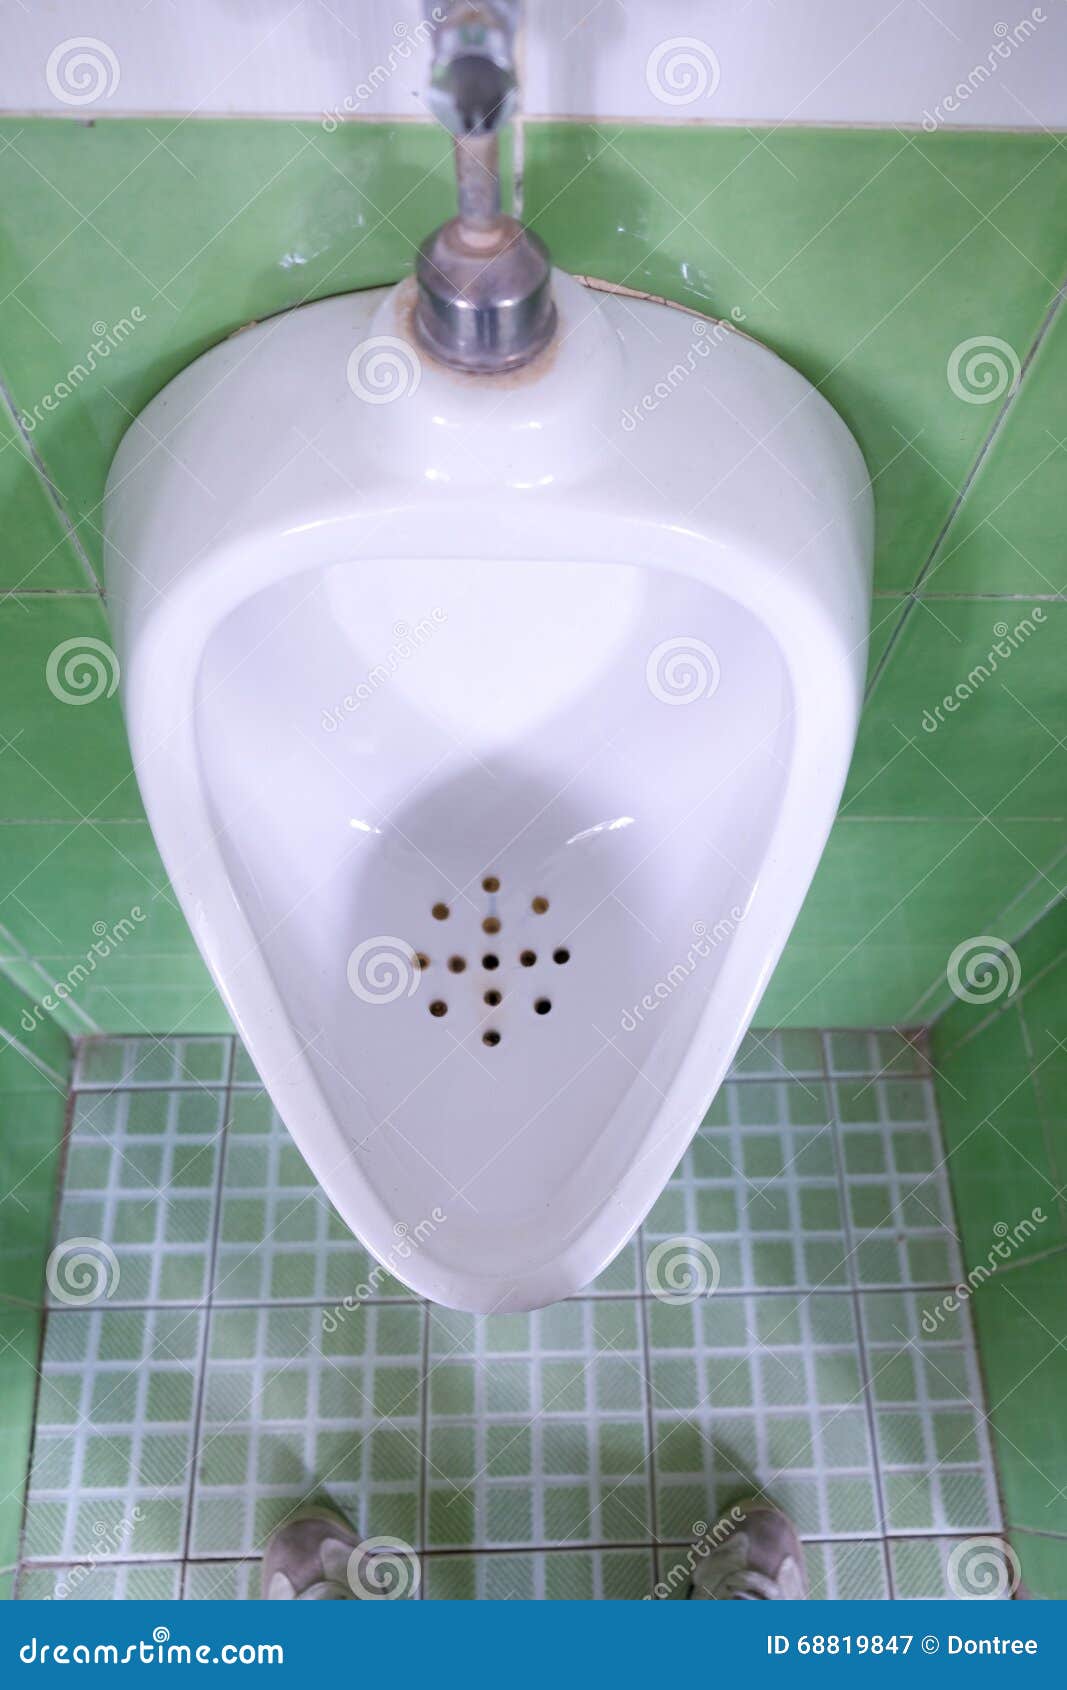 Bathroom peeing picture potty toilet